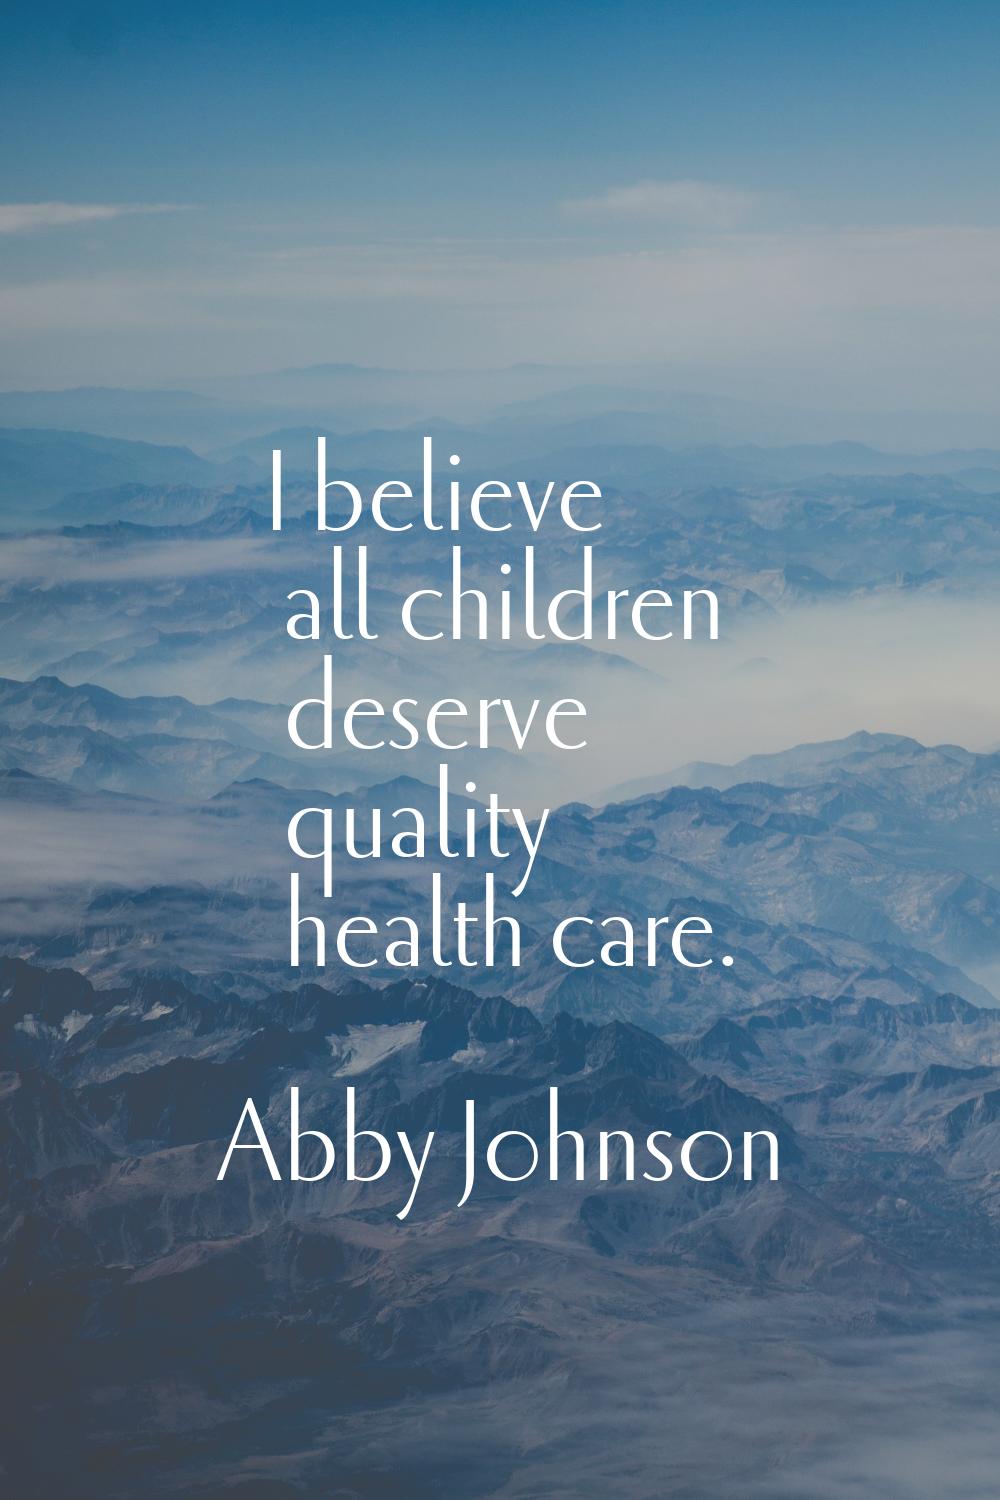 I believe all children deserve quality health care.